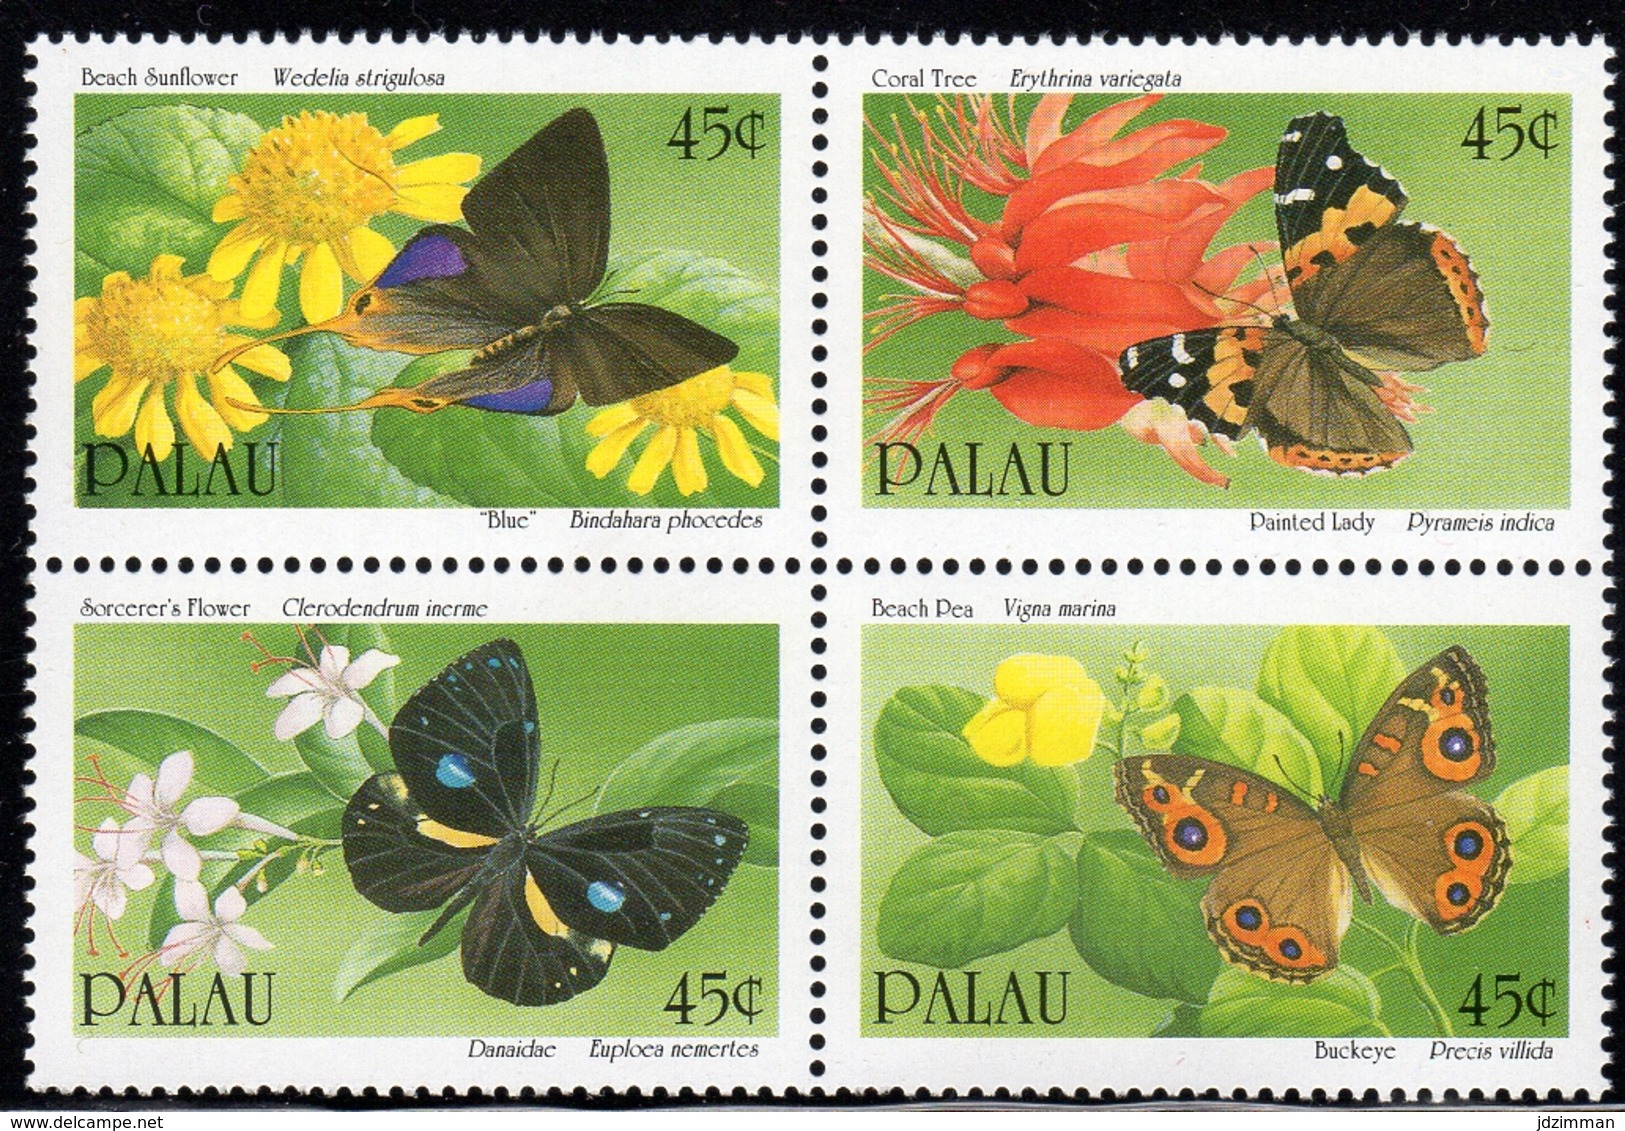 Palau, Scott 2019 No. 245a, Issued 1990, Block Of 4, MNH, Cat. $ 3.75, Flowers/Butterflies - Palau